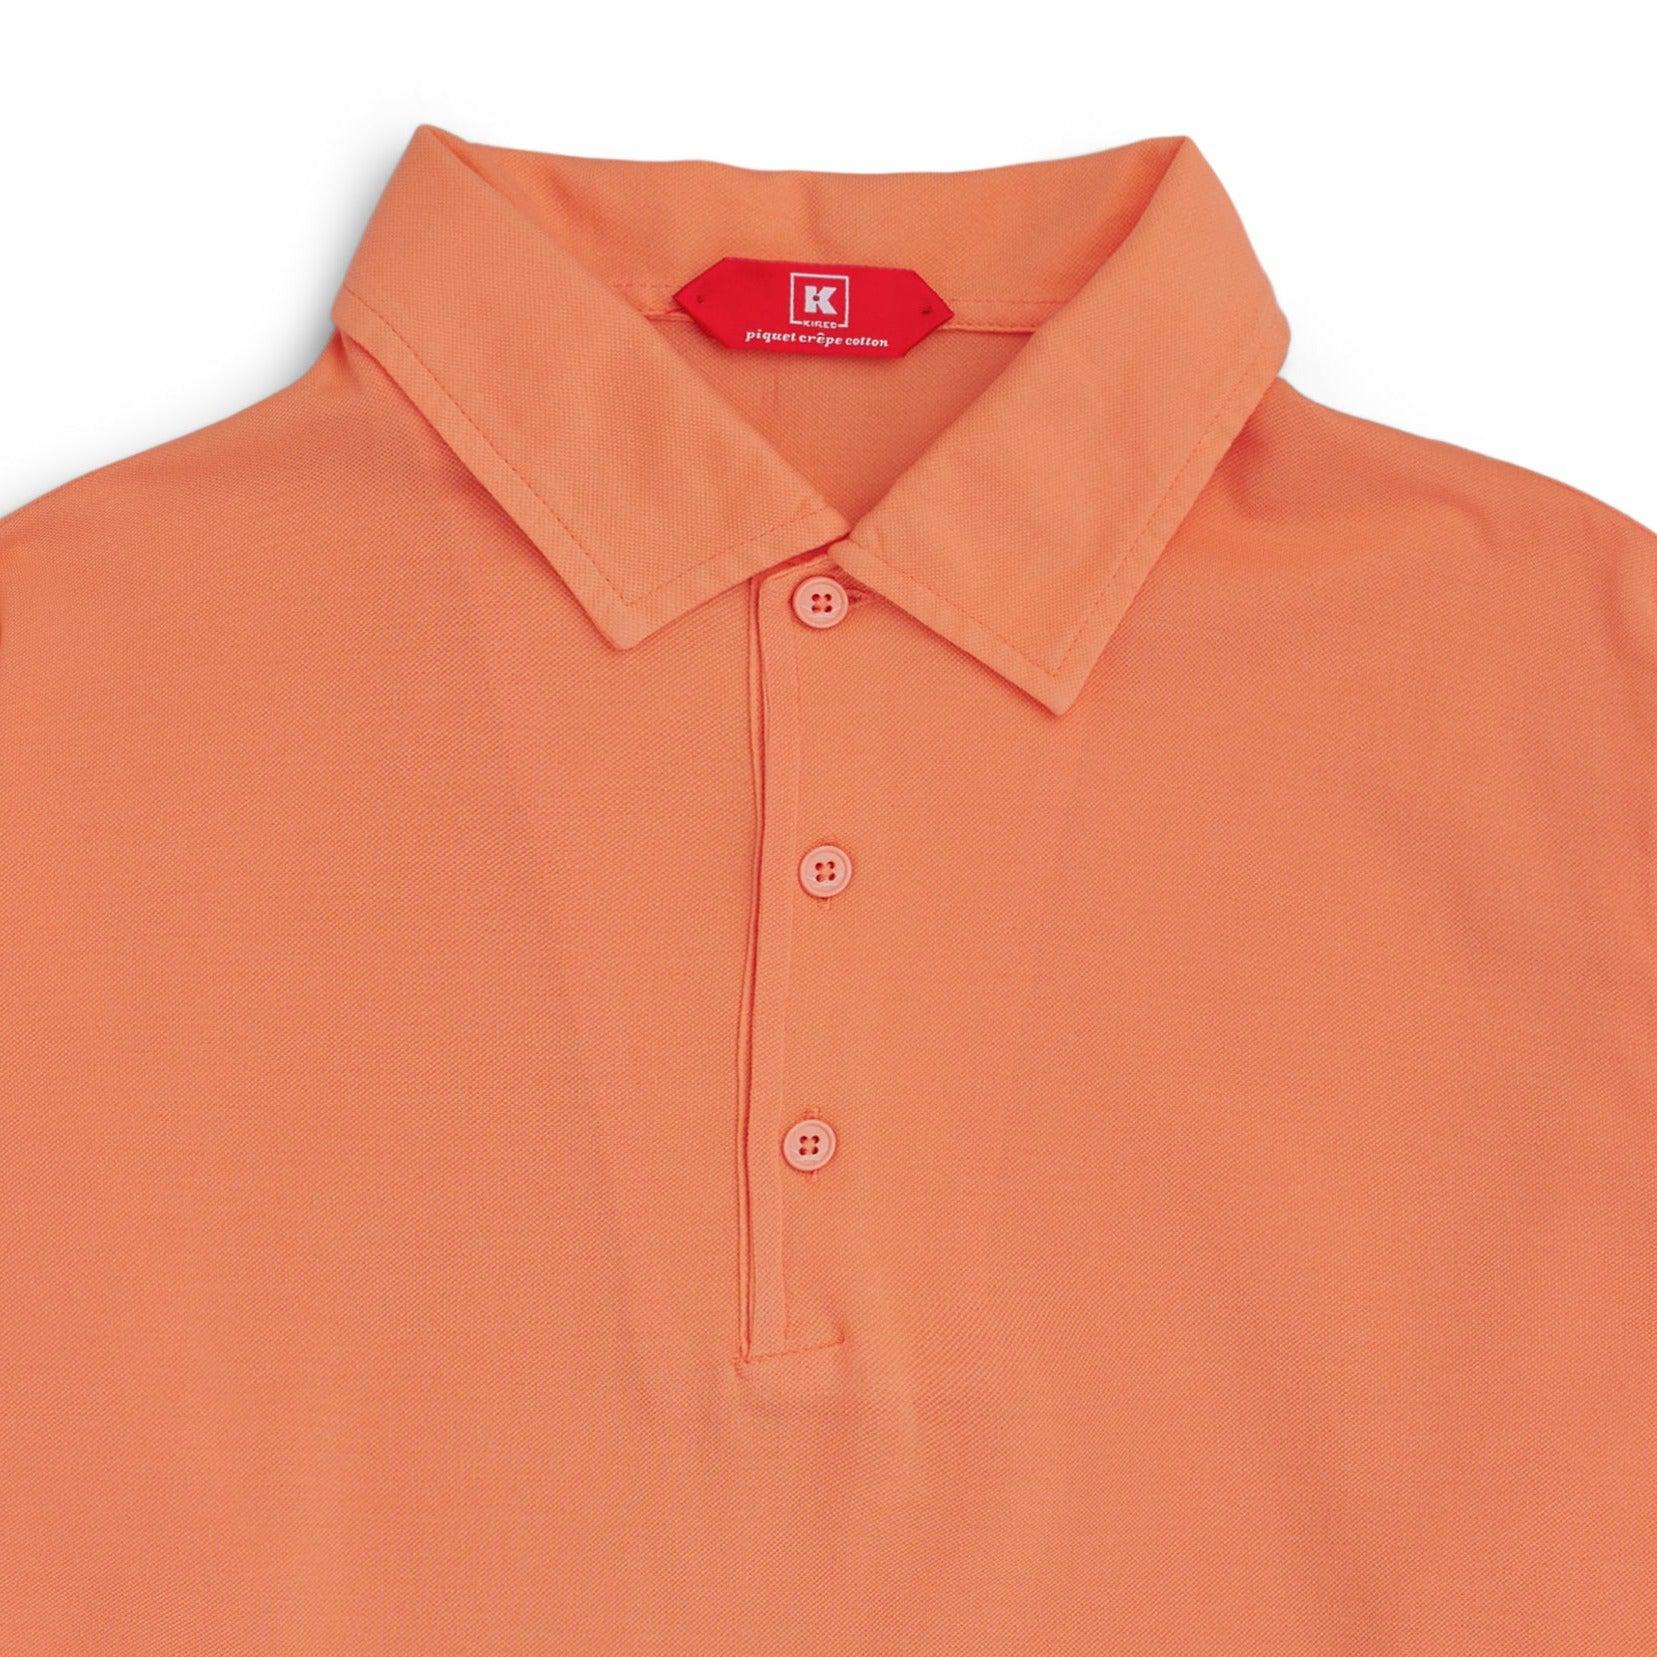 Ponza Jersey Poloshirt Orange-piké-Kired-Phrase